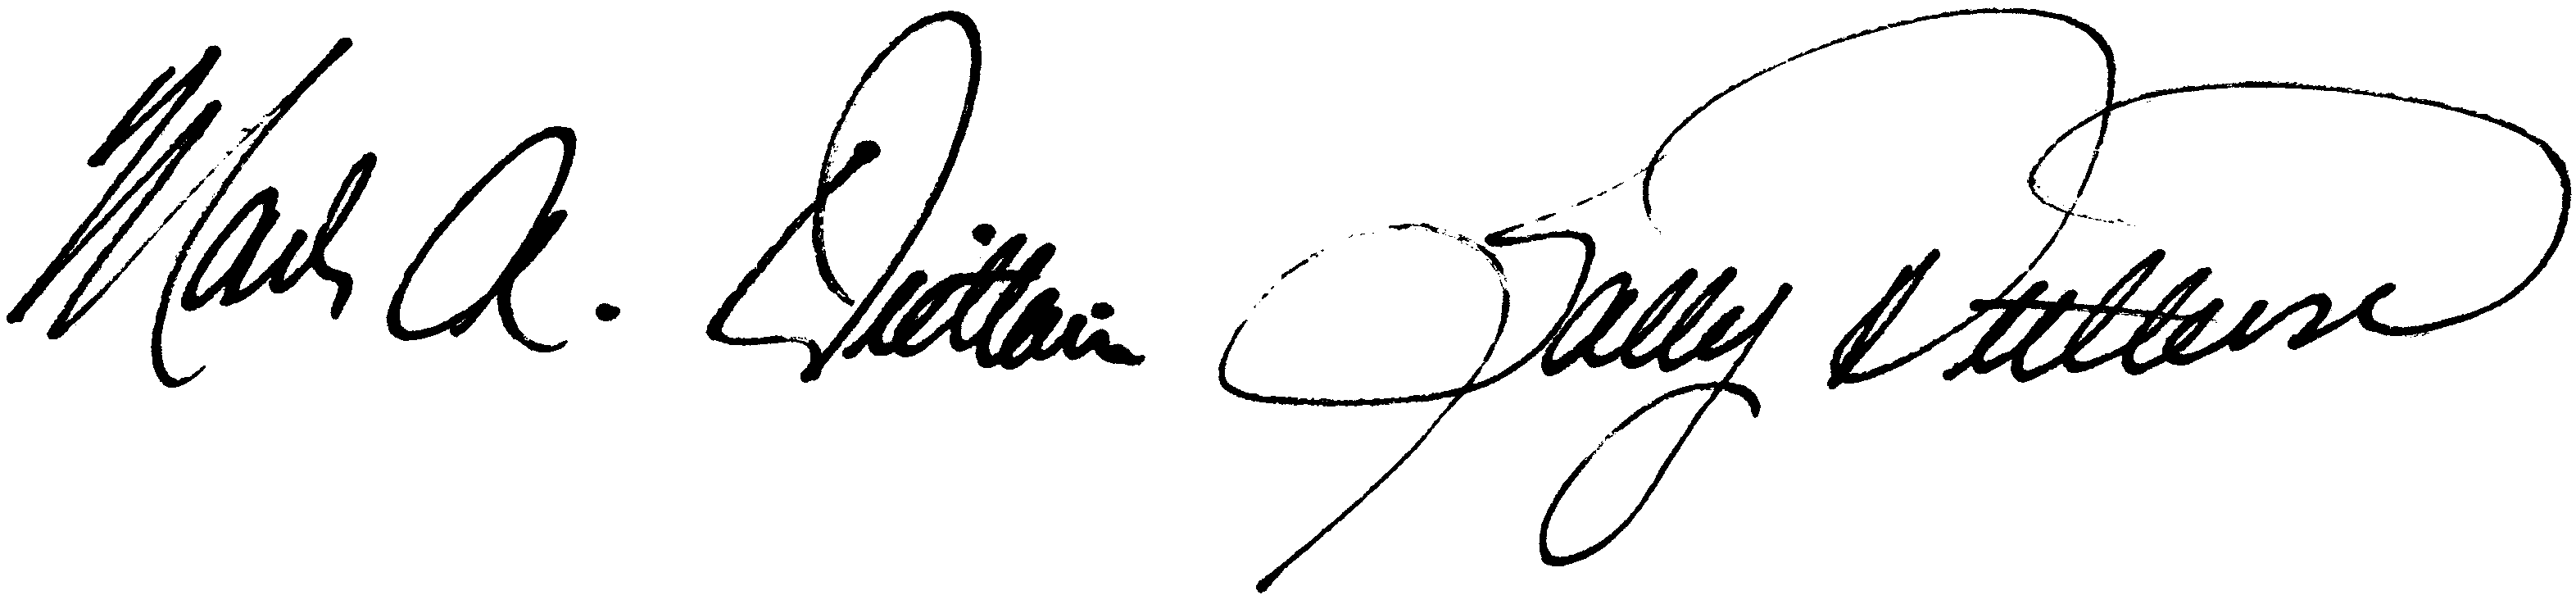 Mark Sally Signatures Hrz